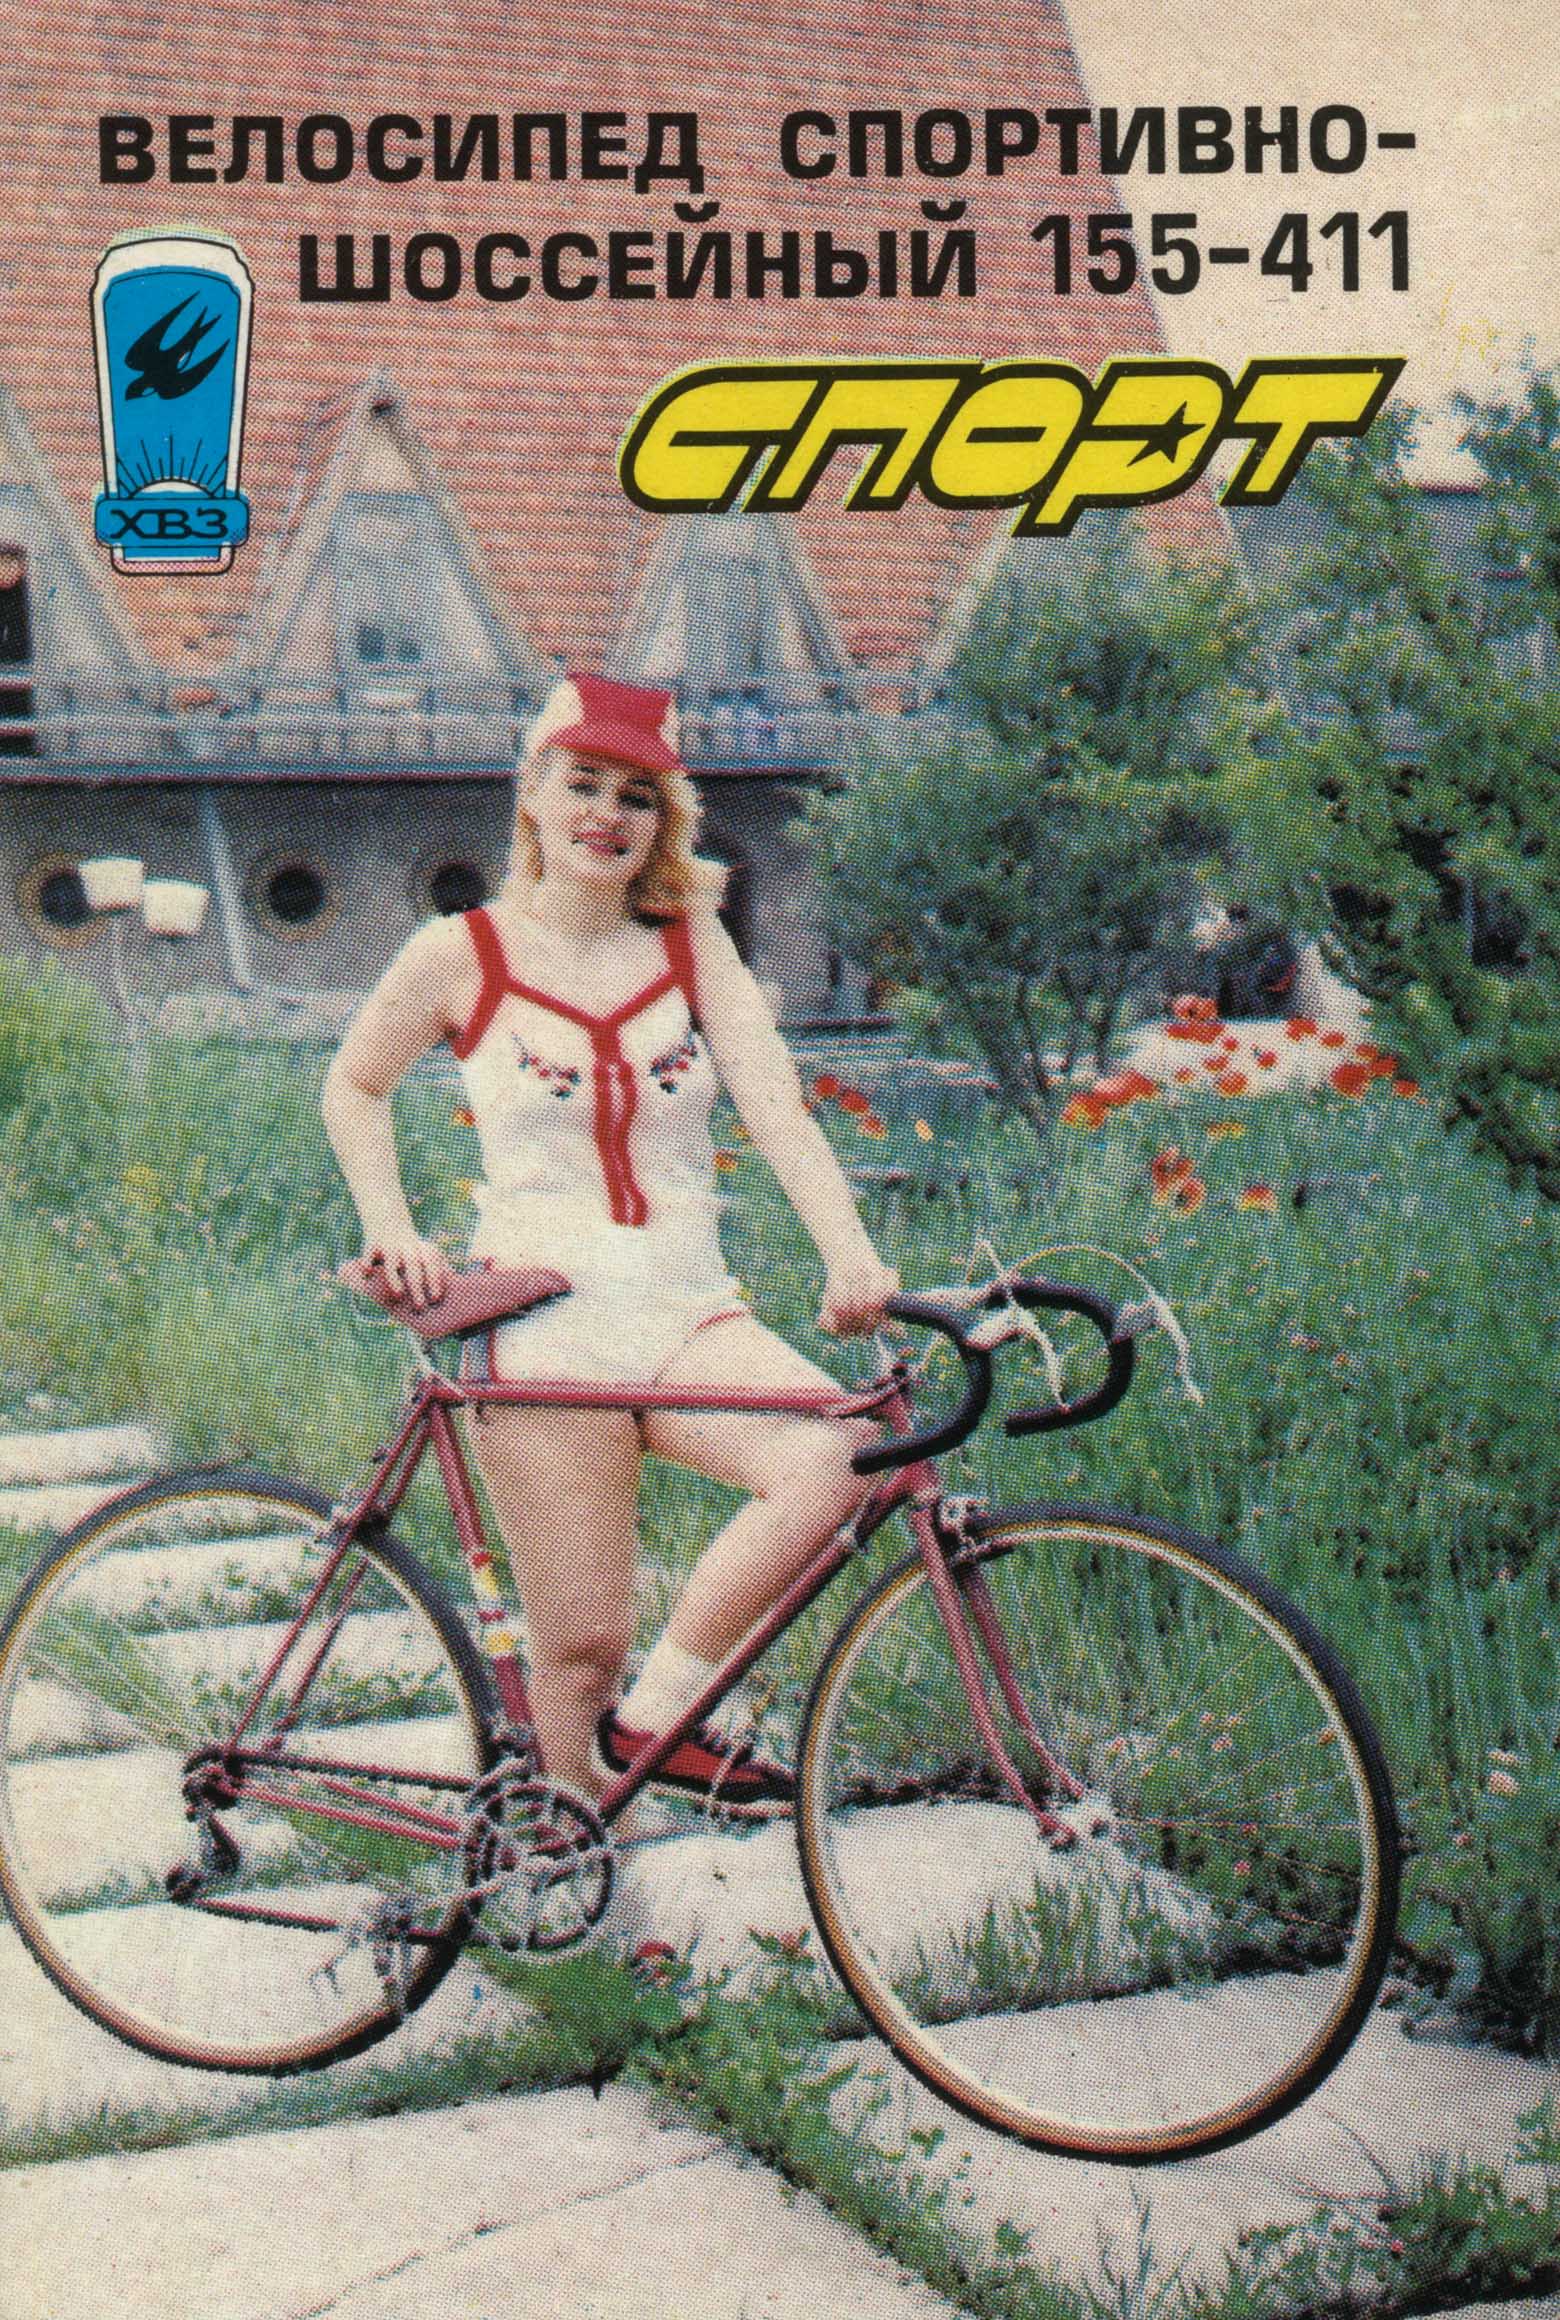 Kharkov - Sport (155-411) calendar 1989 scan 1 main image